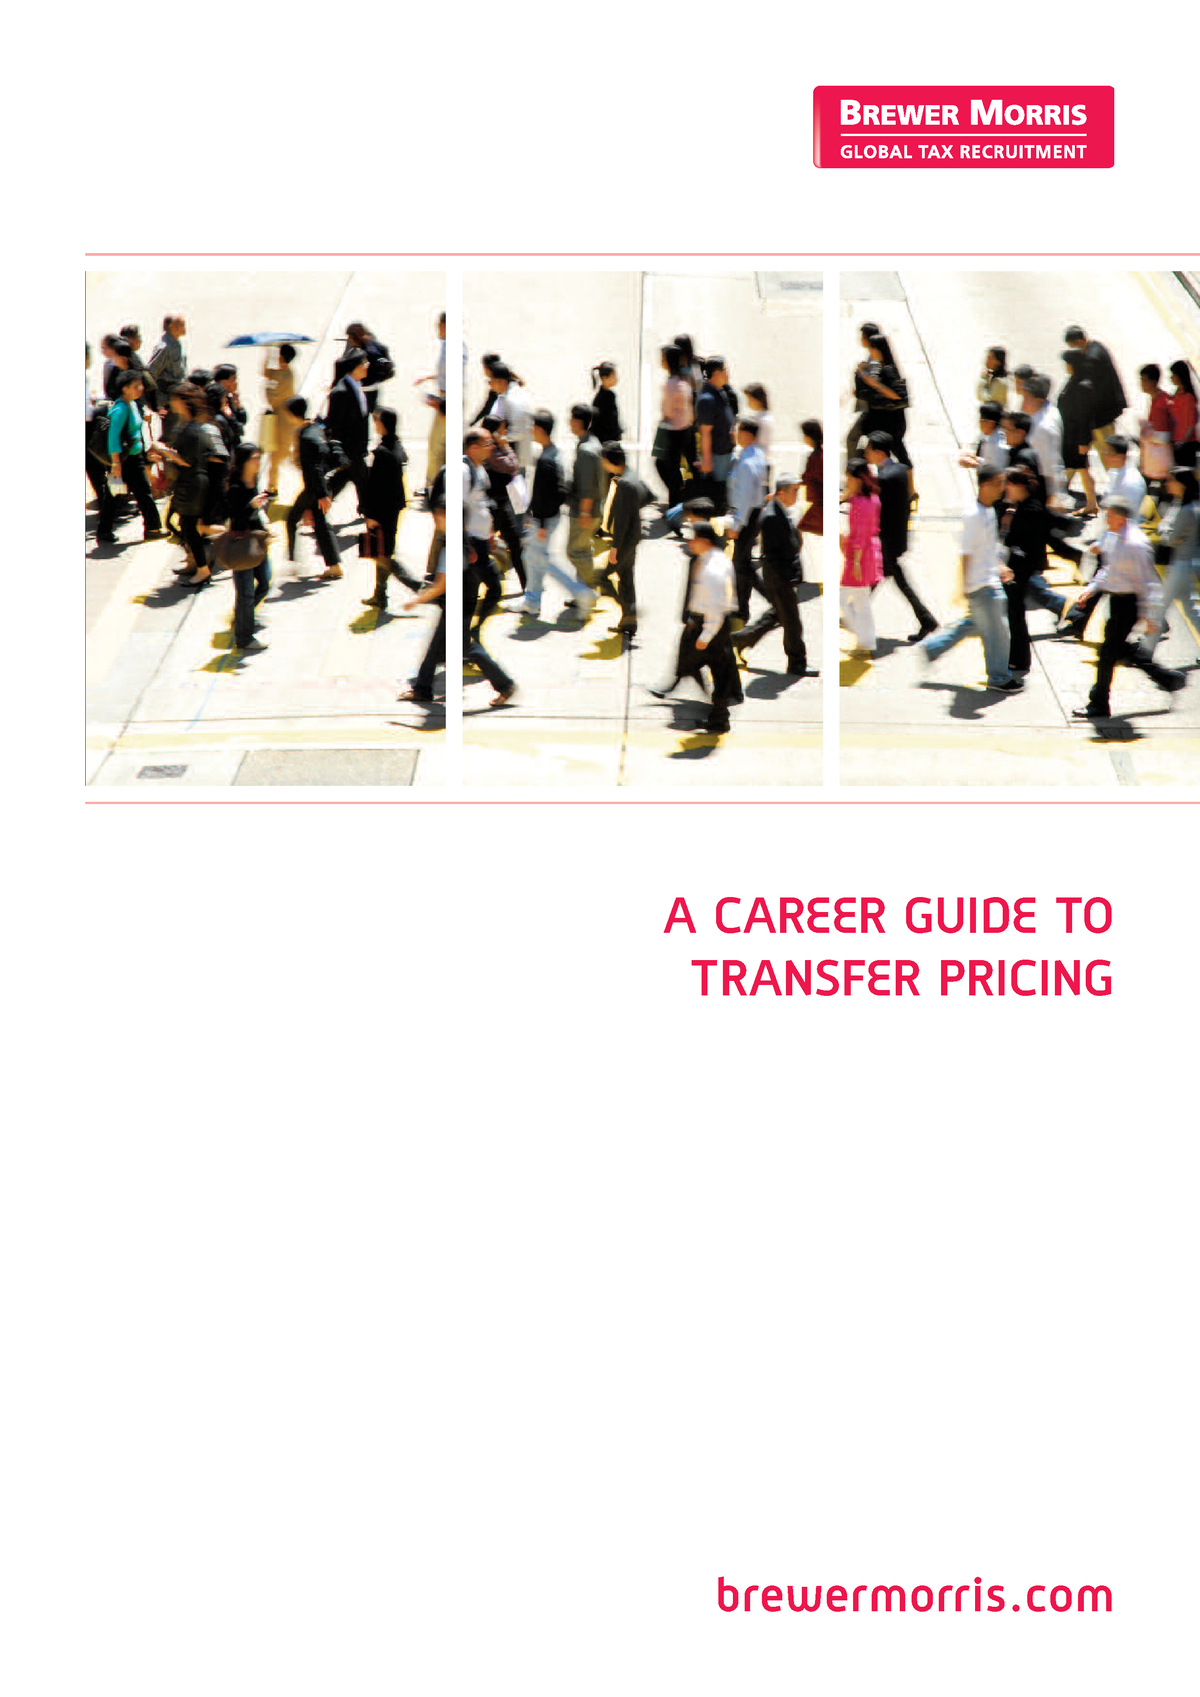 bm-uk-acareer-guideto-transfer-pricing-2011-transfer-pricing-this